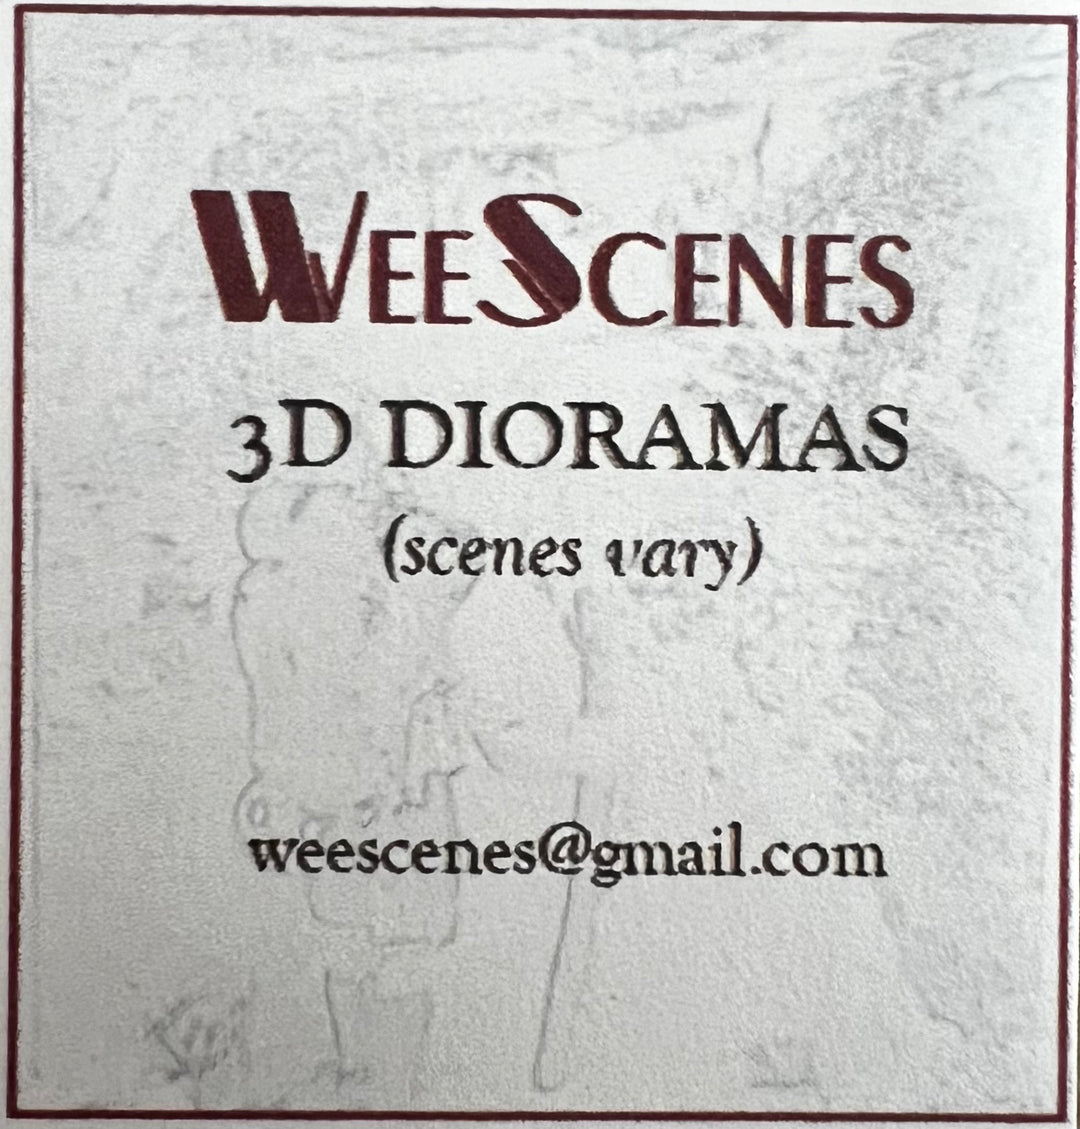 Art-o-mat - Wee Diorama Scenes